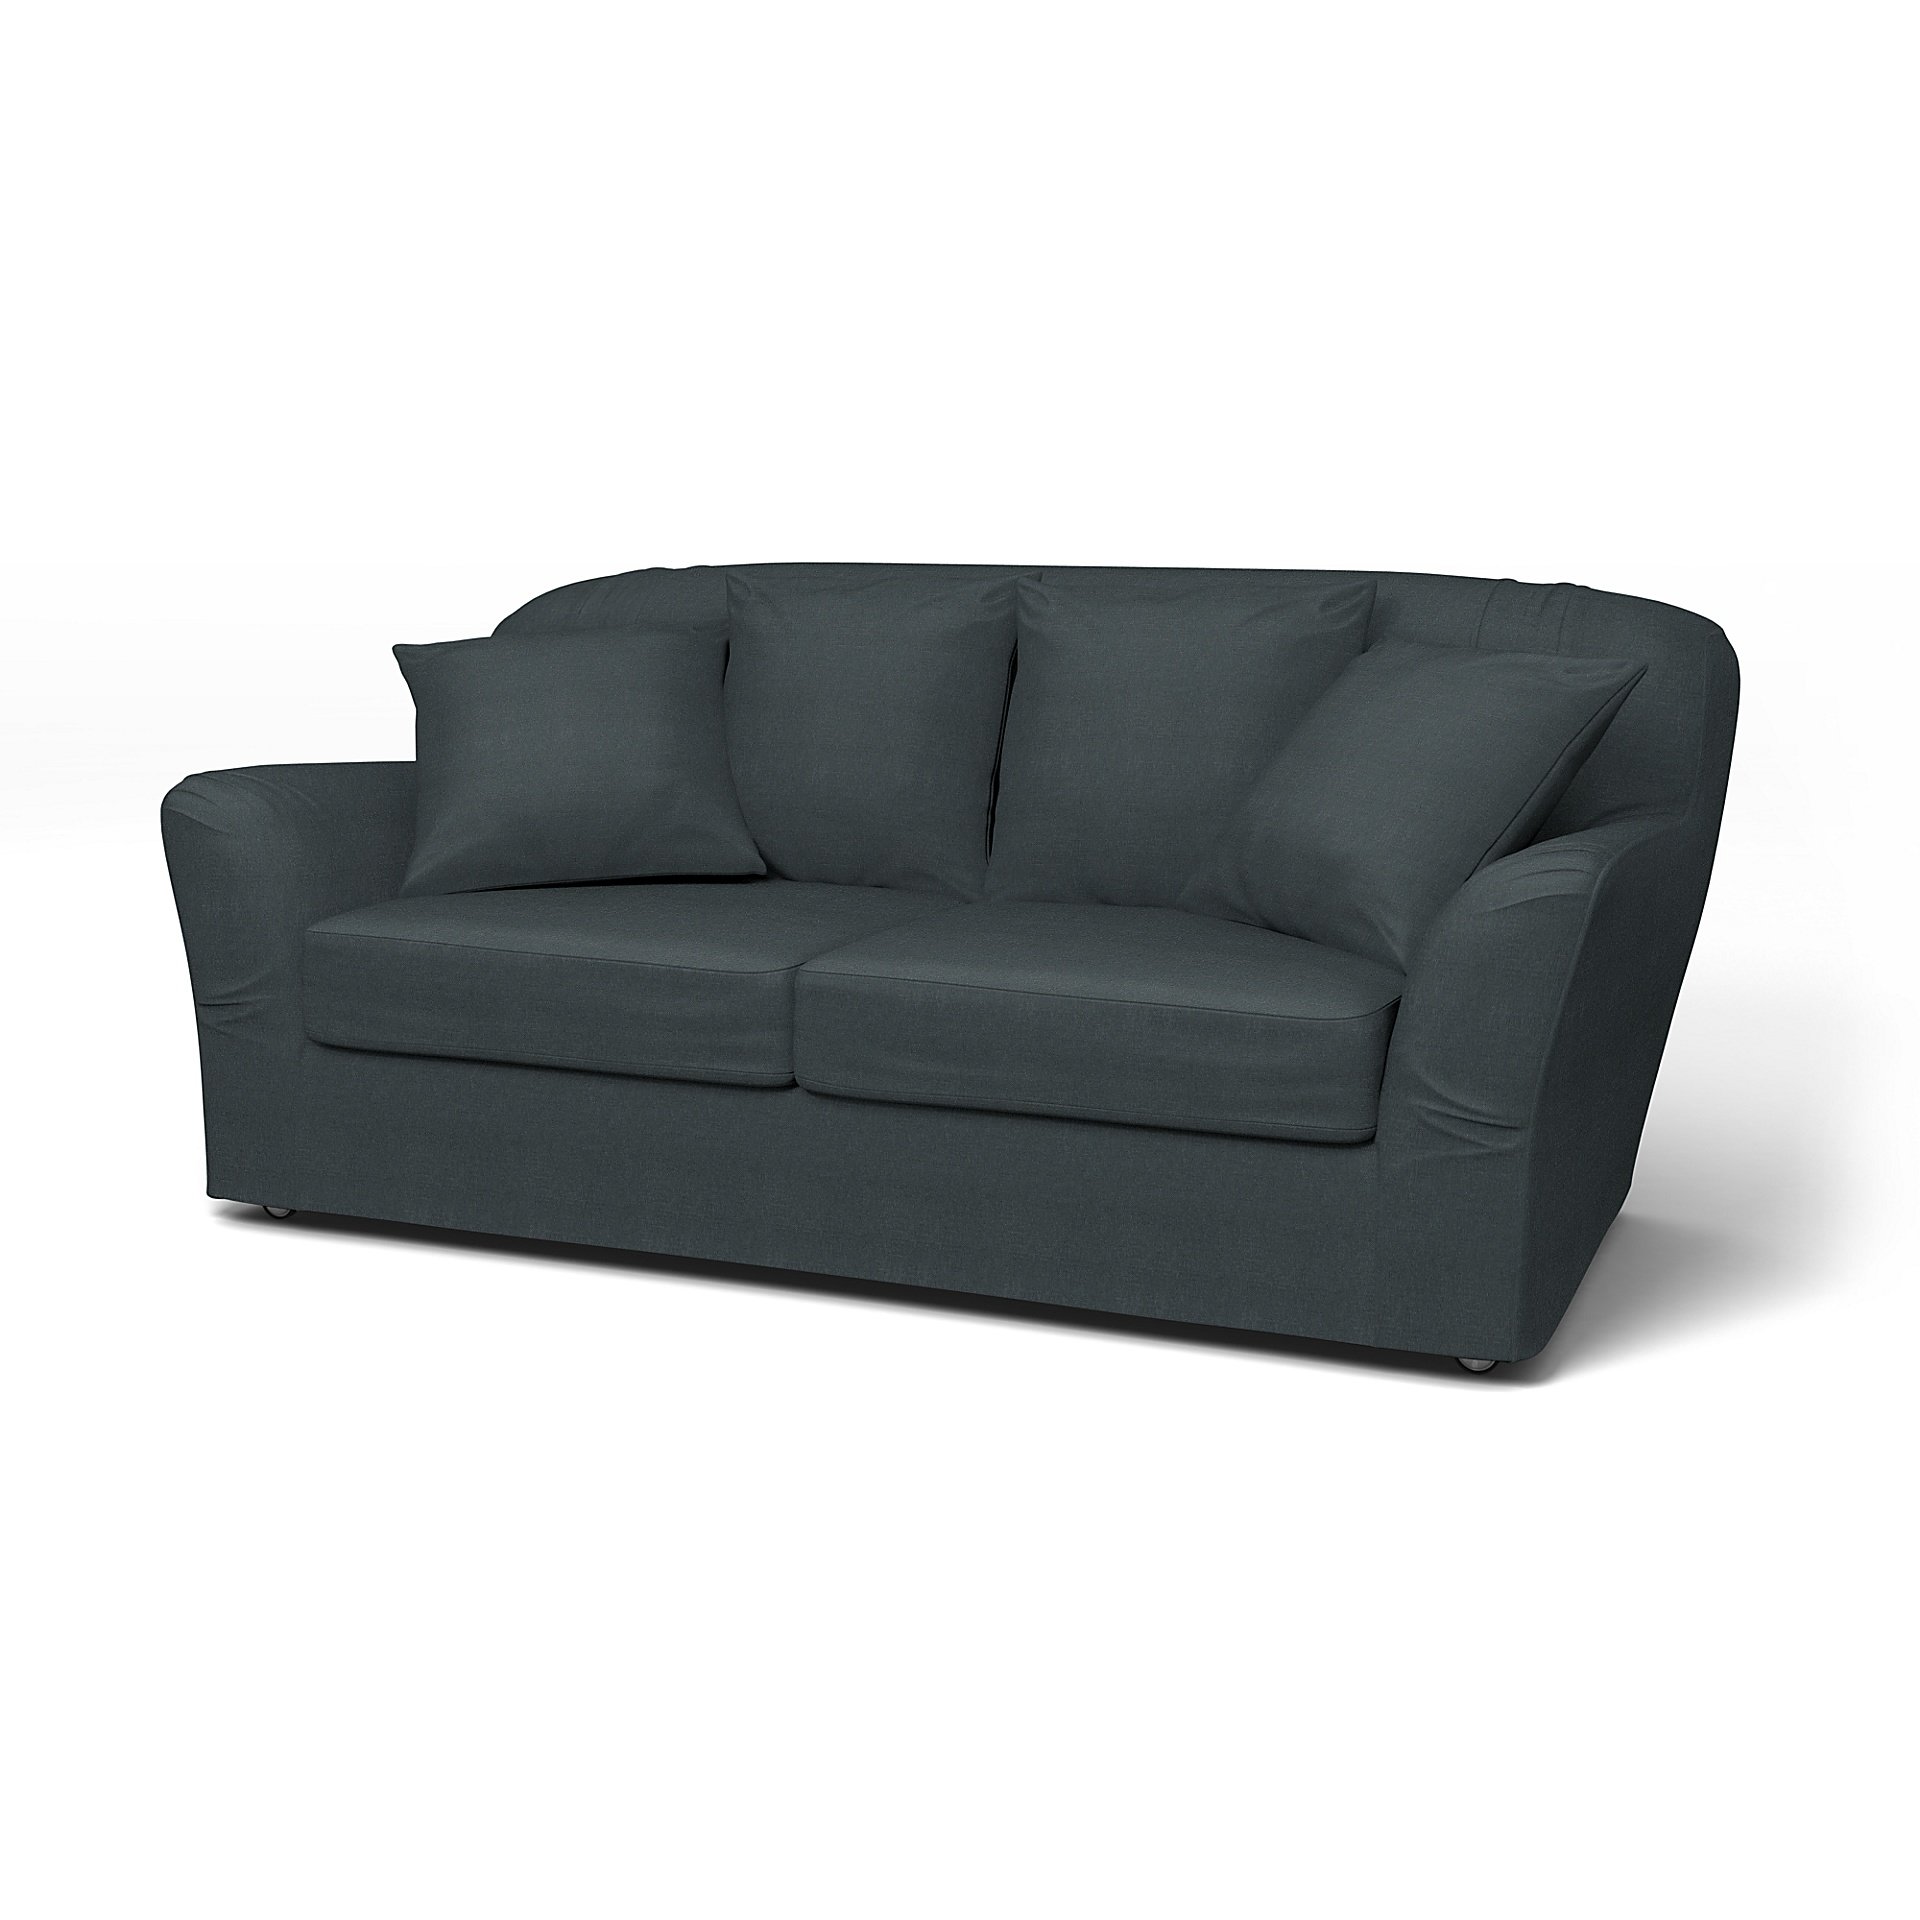 IKEA - Tomelilla 2 seater sofa, Graphite Grey, Linen - Bemz